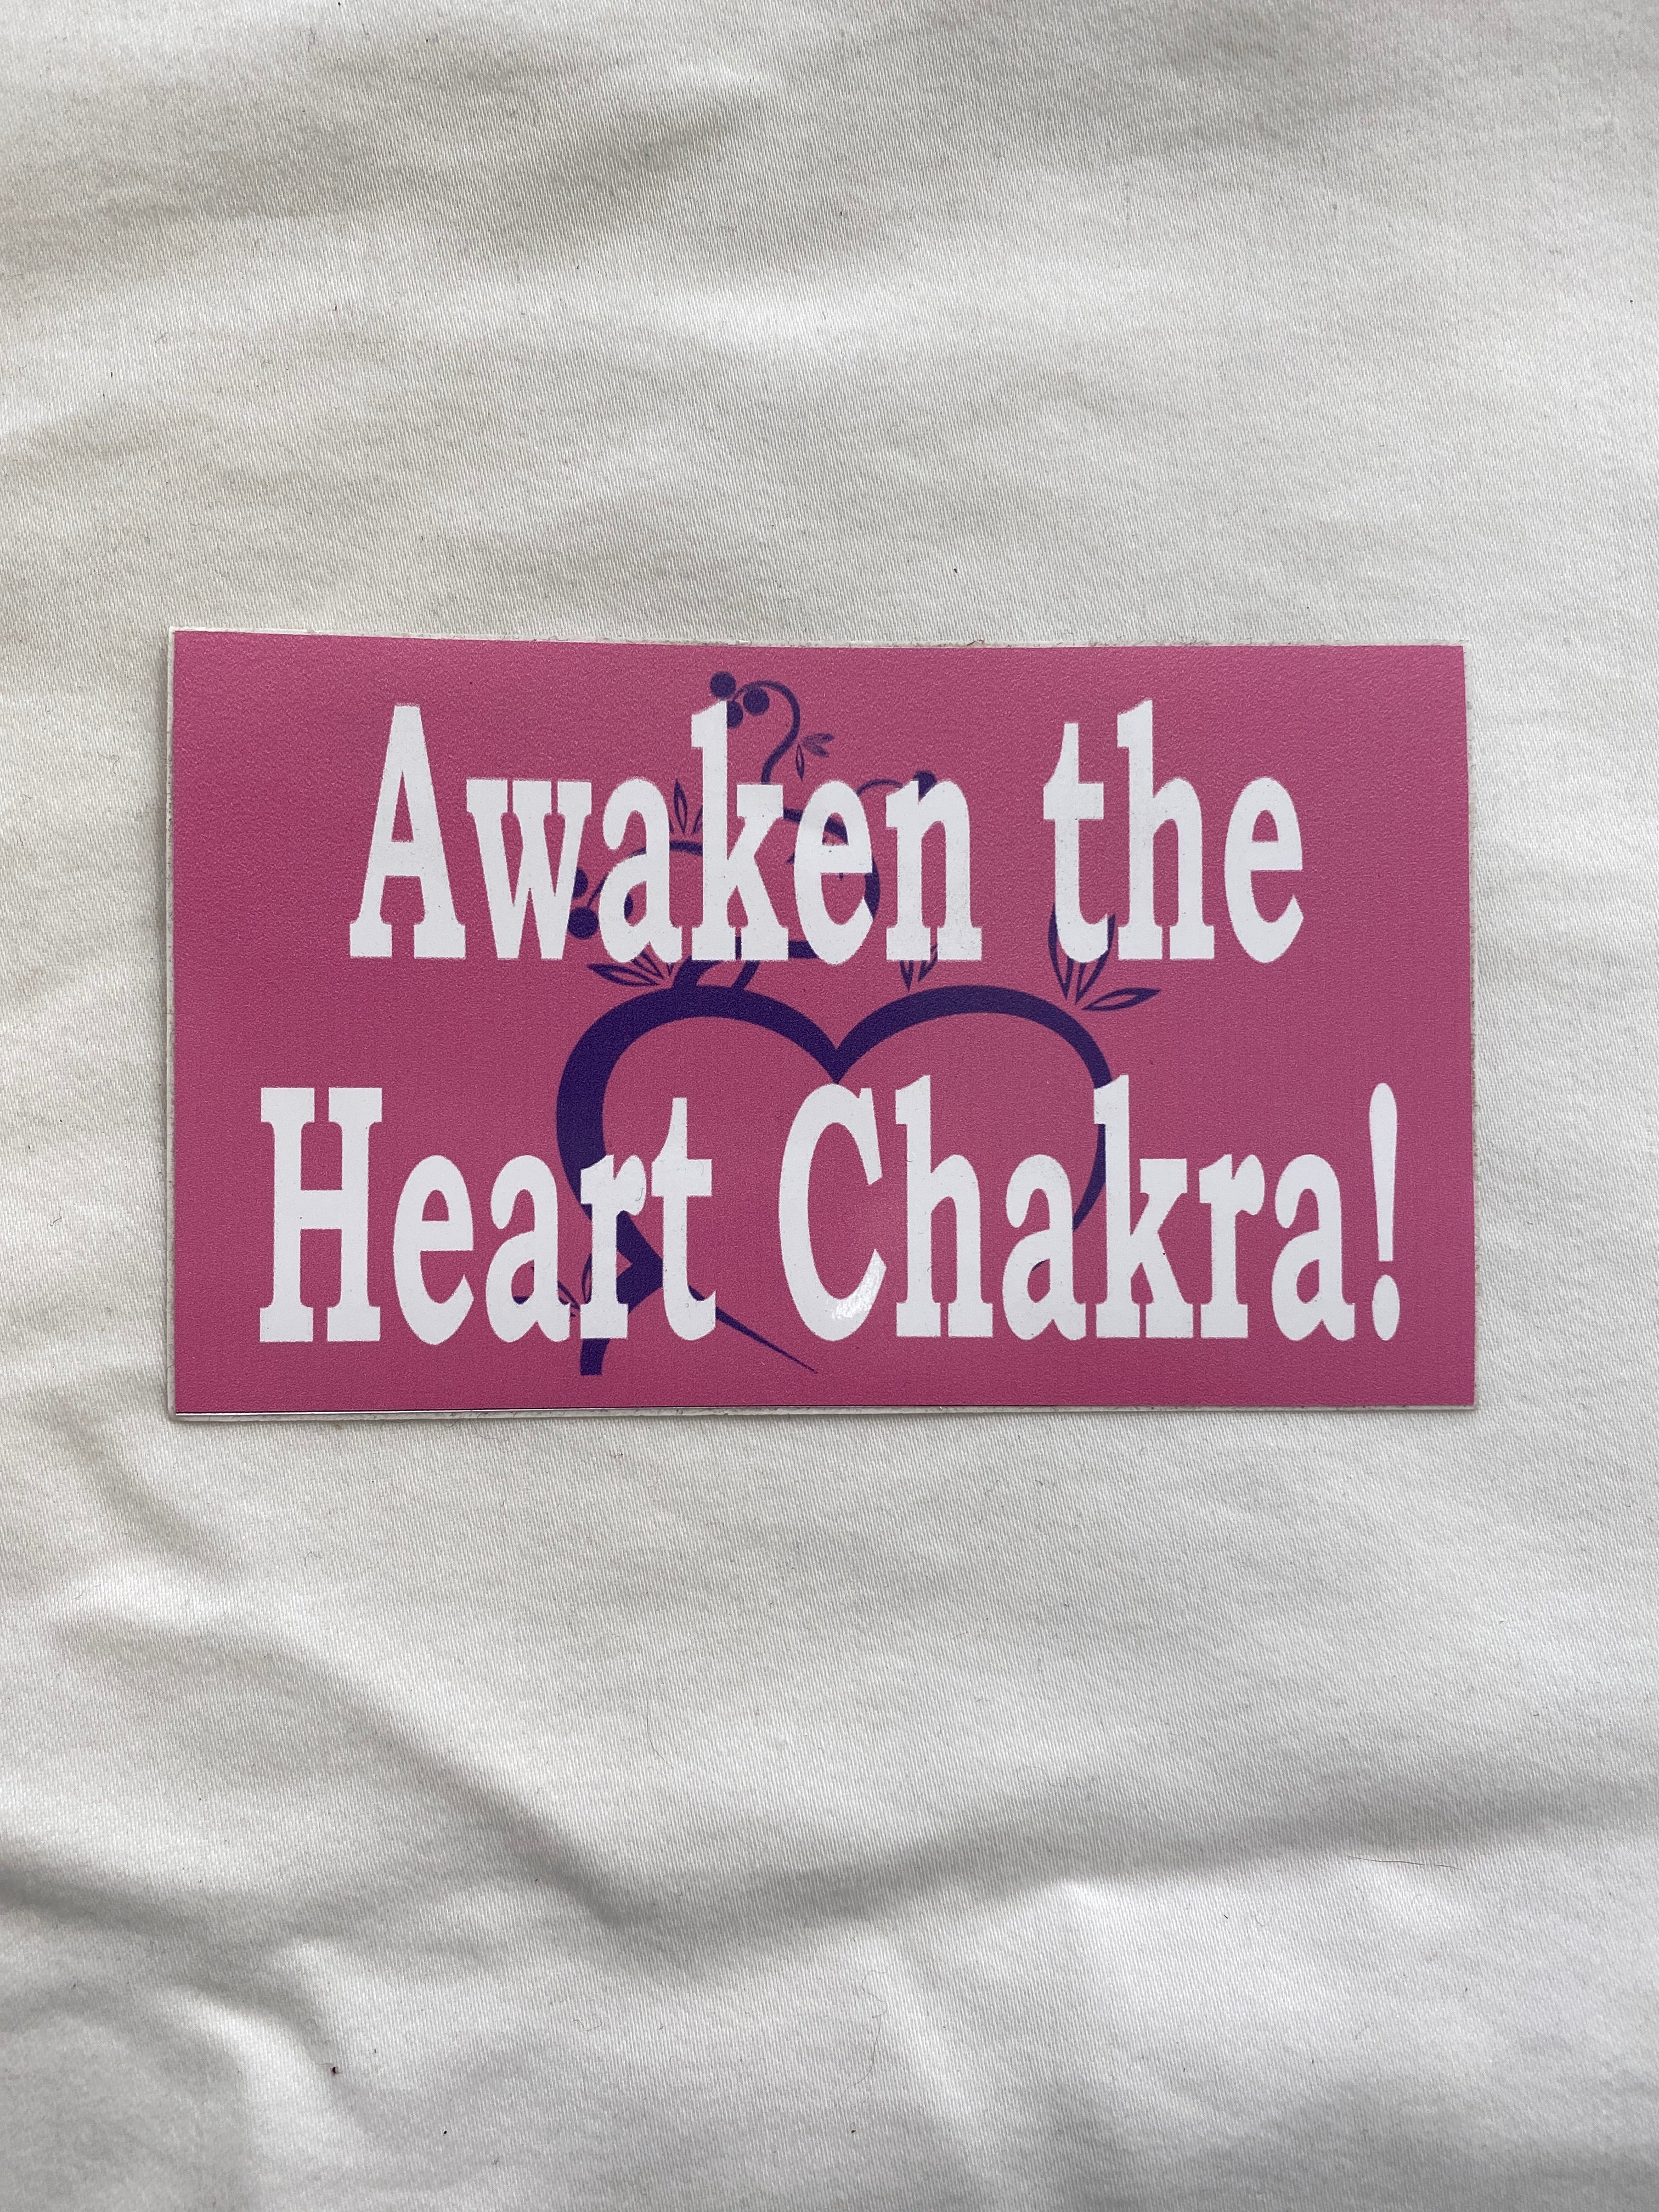 Awaken the Heart Chakra! Stickers